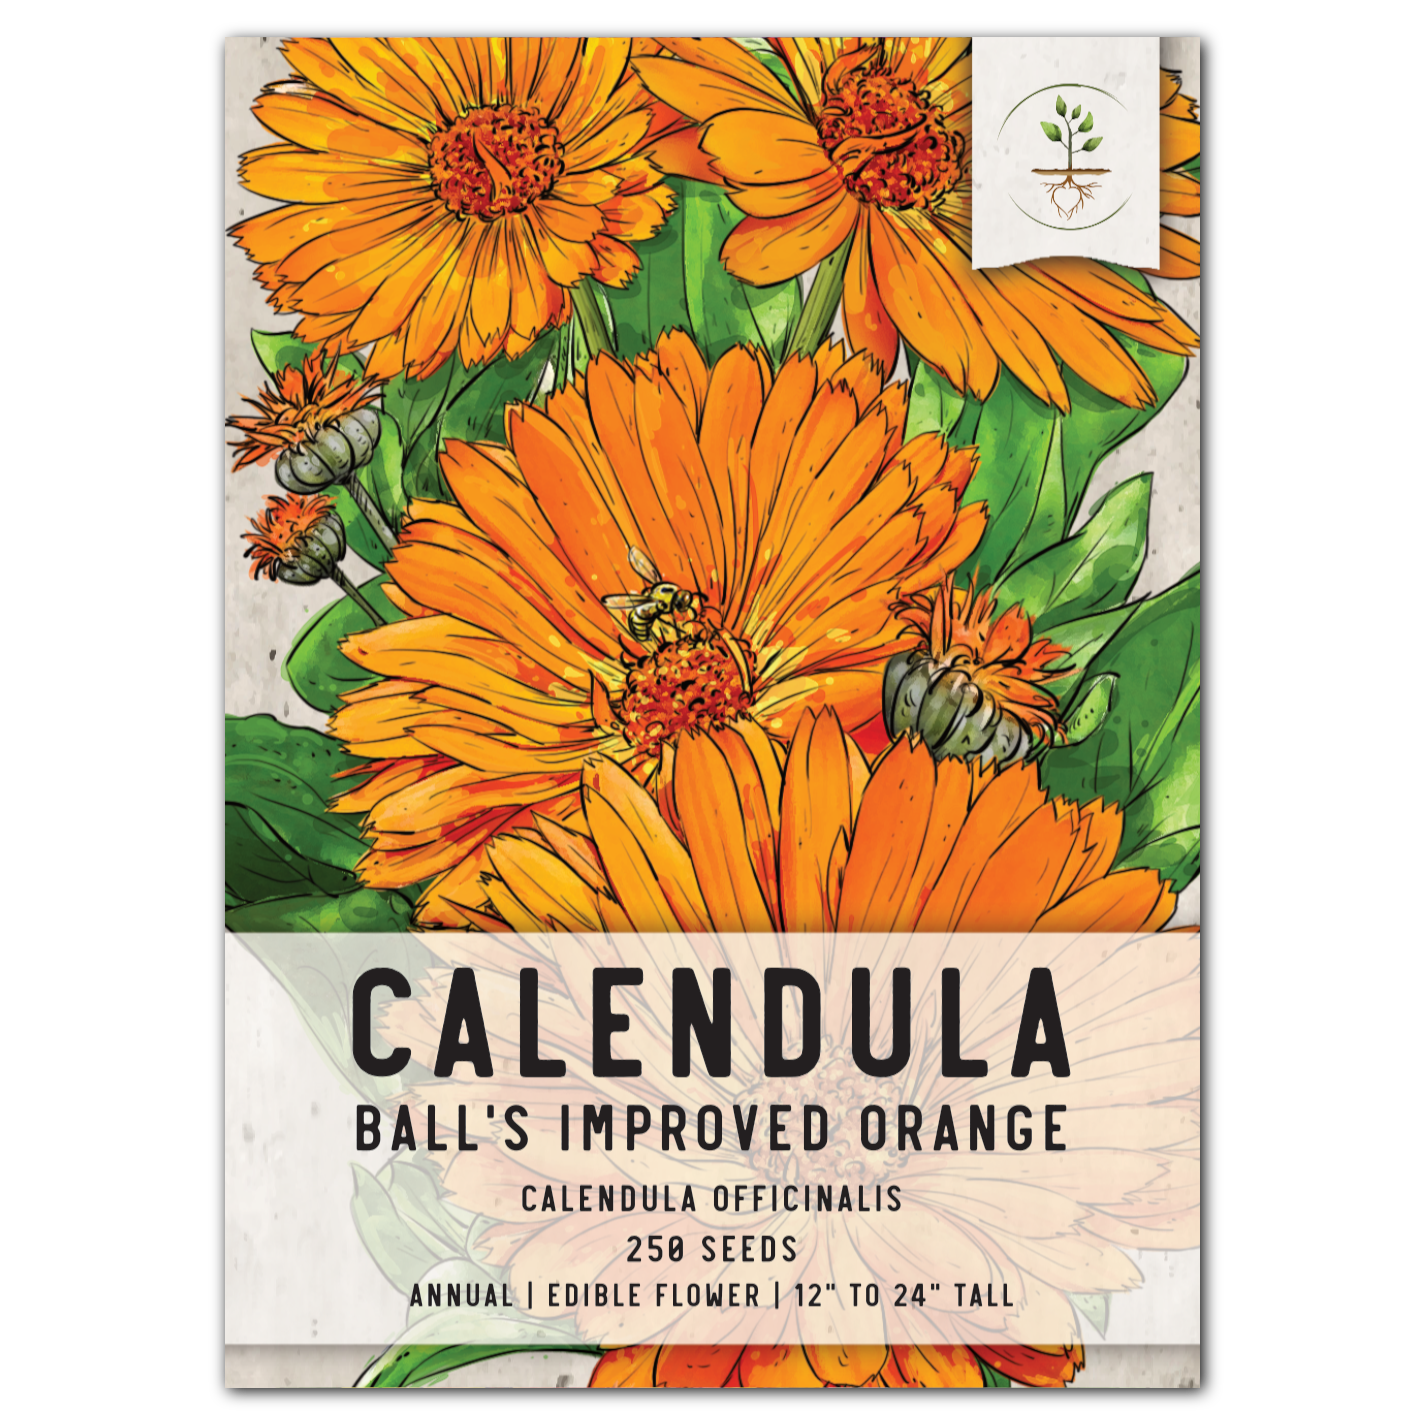 Balls Improved Orange Calendula (Calendula officinalis)